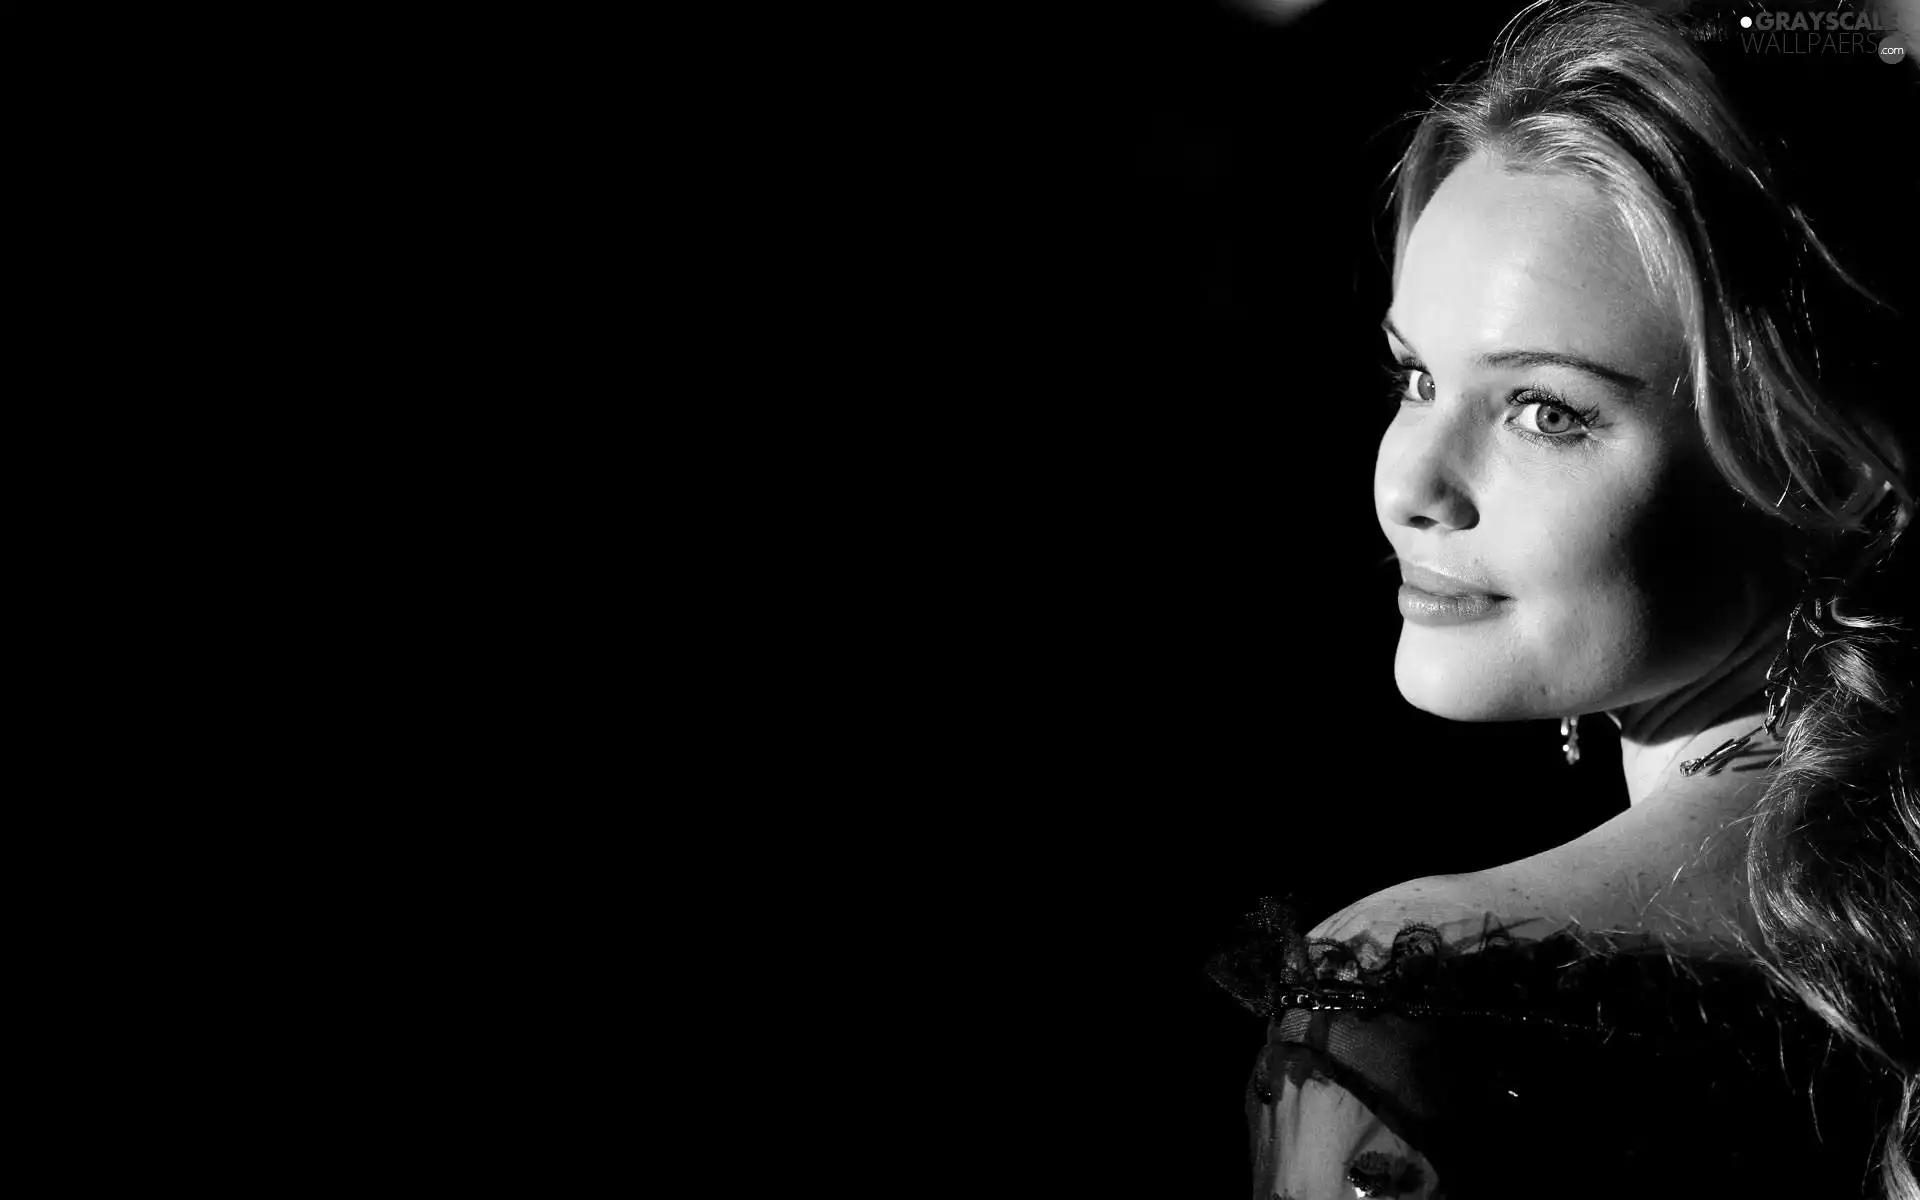 smiling, black, tunic, Kate Bosworth